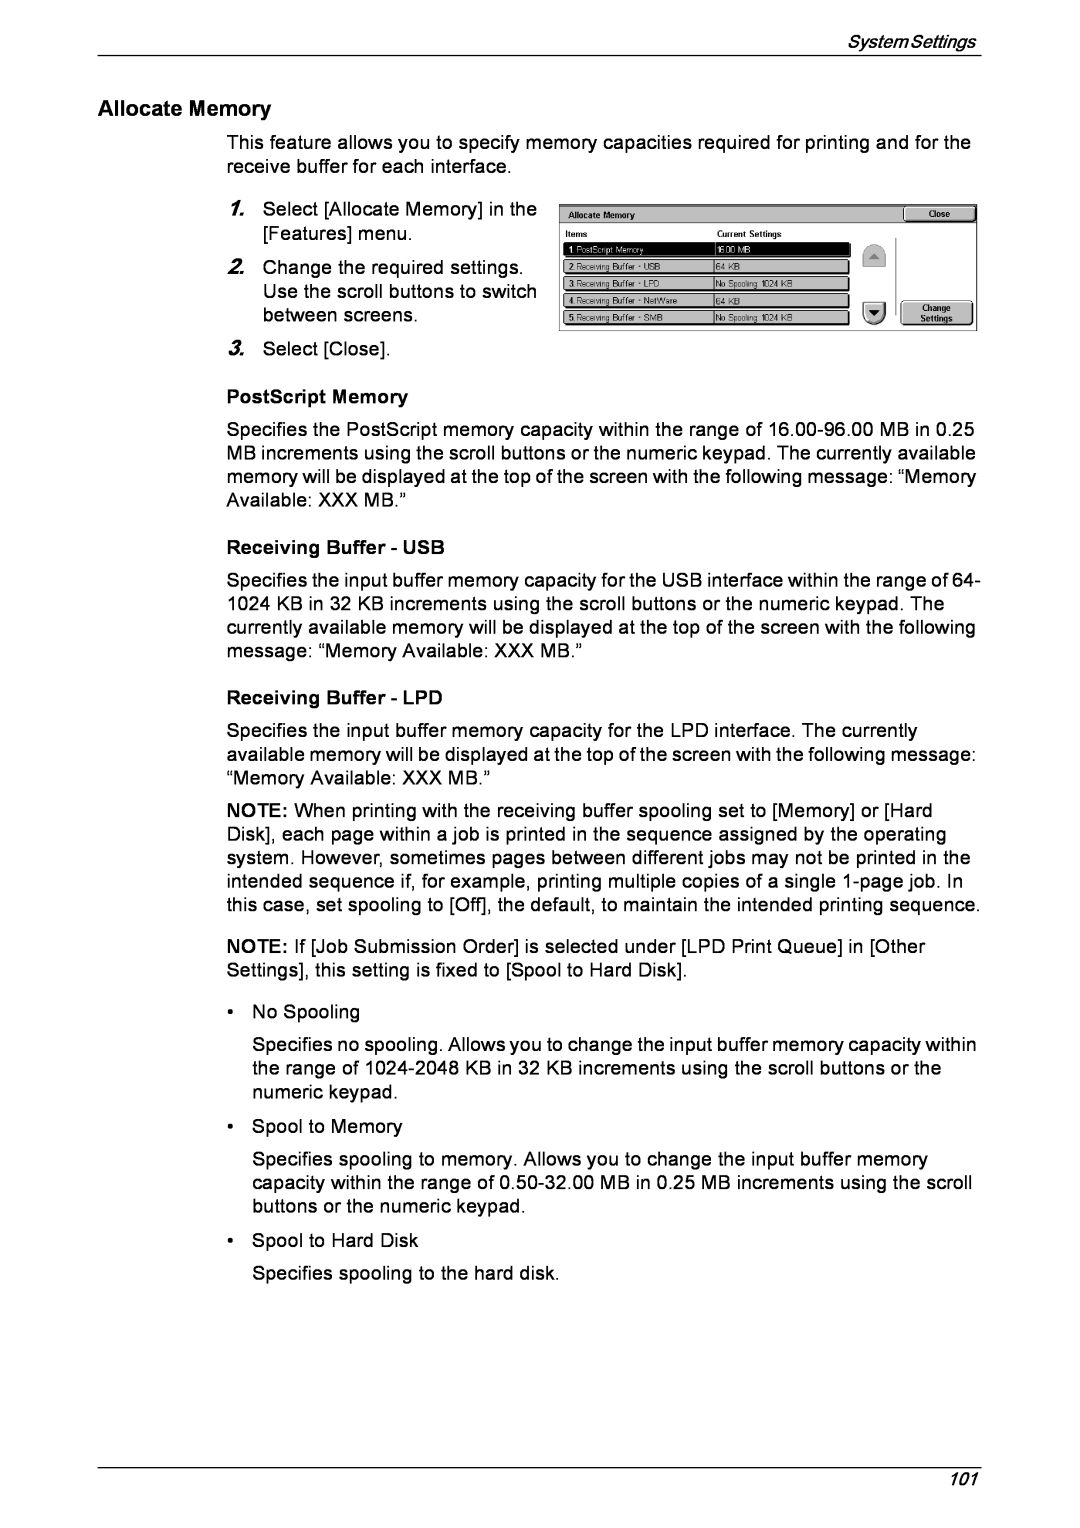 Xerox 5222 manual Allocate Memory, PostScript Memory, Receiving Buffer - USB, Receiving Buffer - LPD 